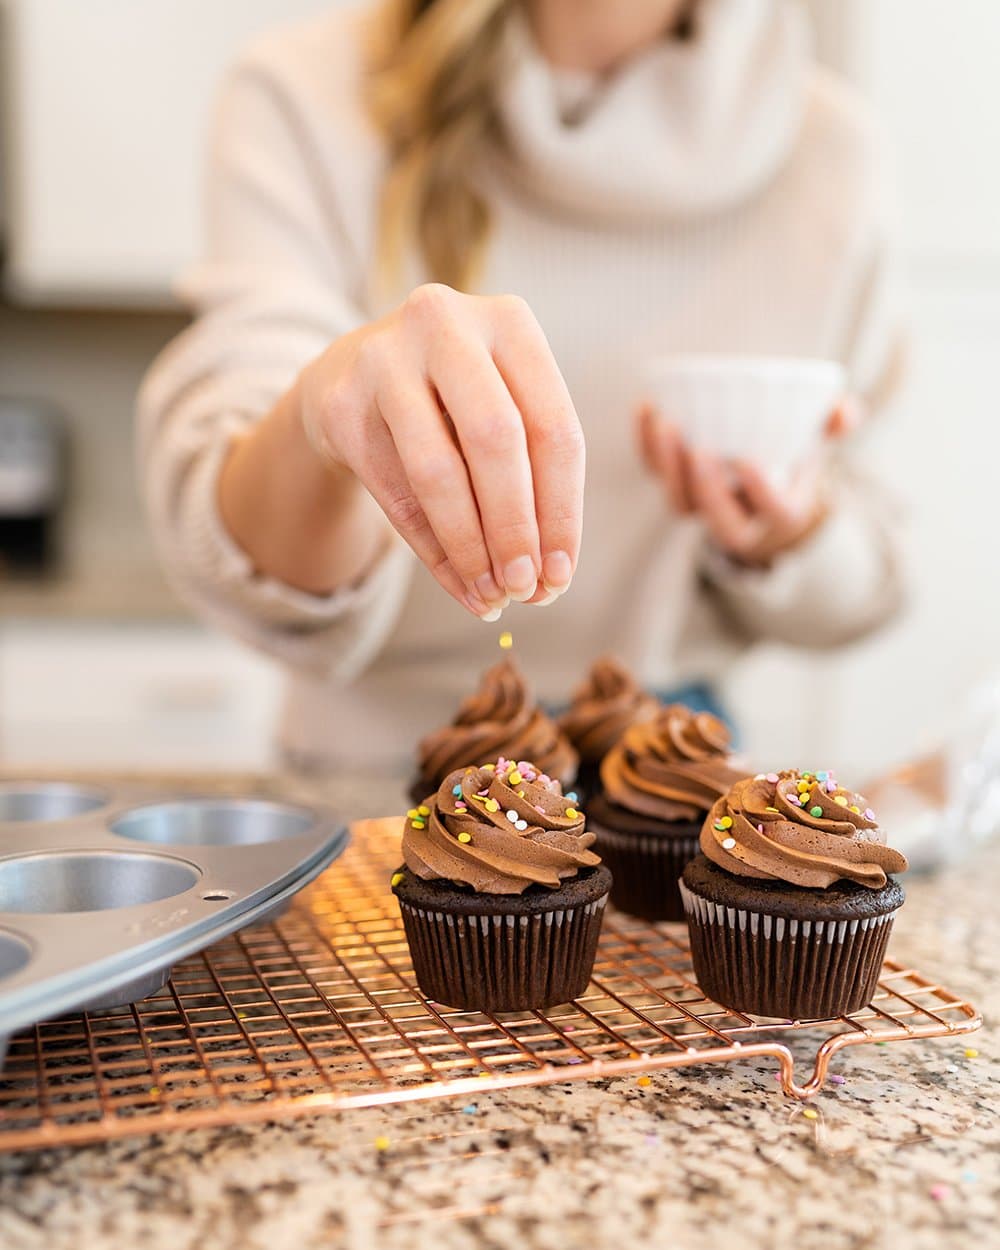 decorating chocolate cupcakes with sprinkles